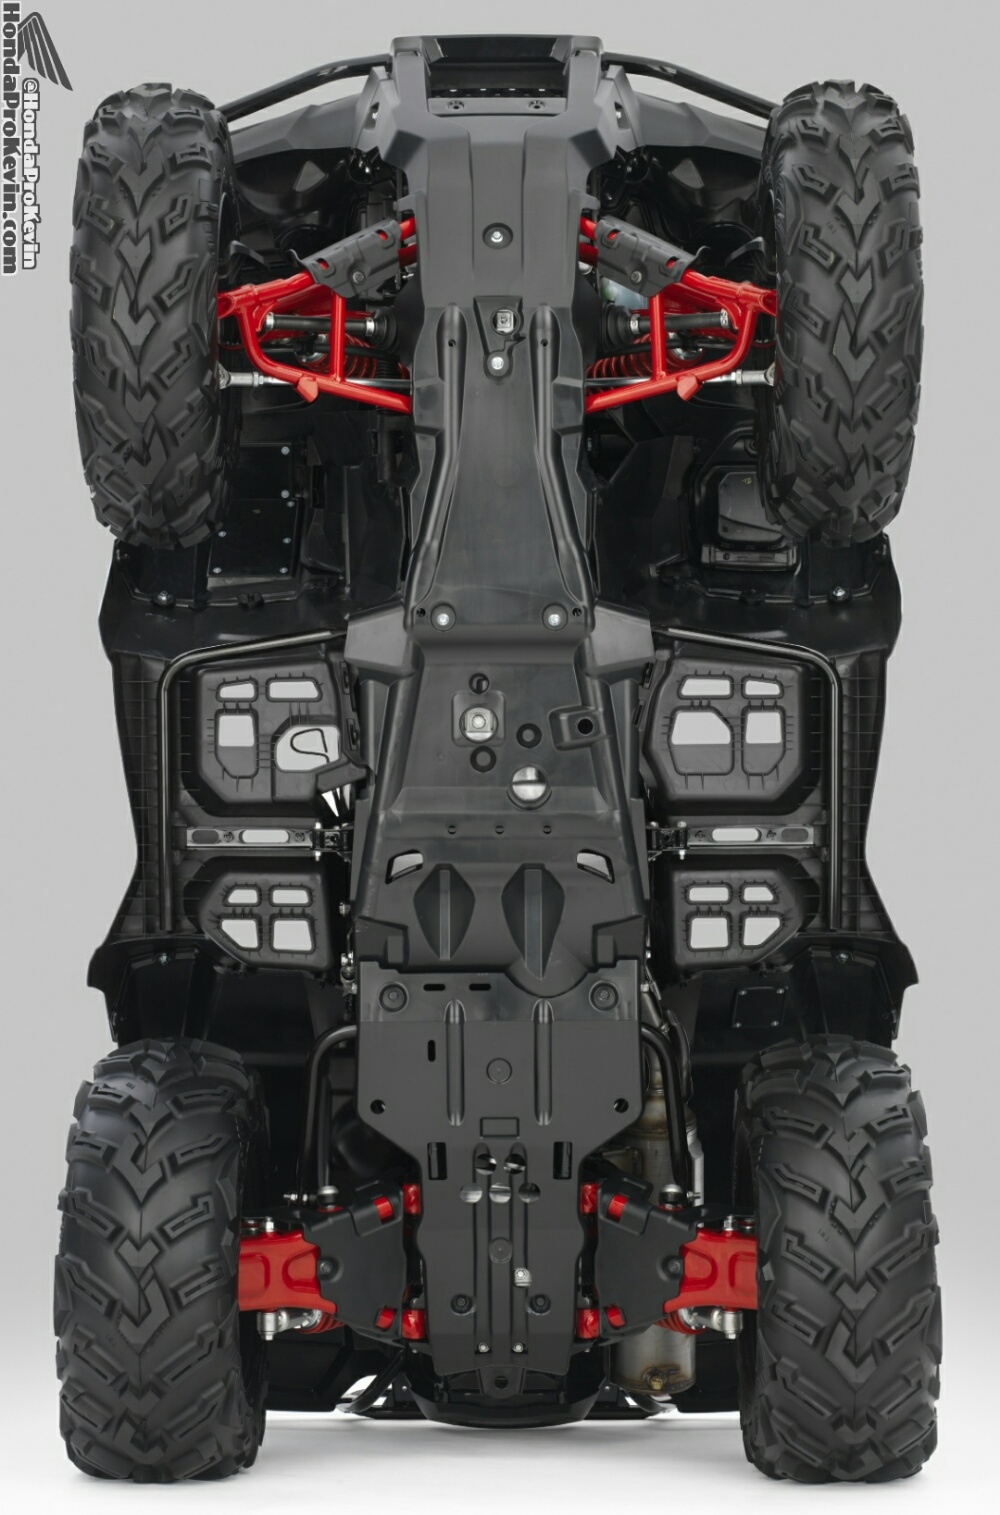 2021 Honda Foreman Rubicon 520 ATV Skid Plates / Guards - TRX520 Review of Specs